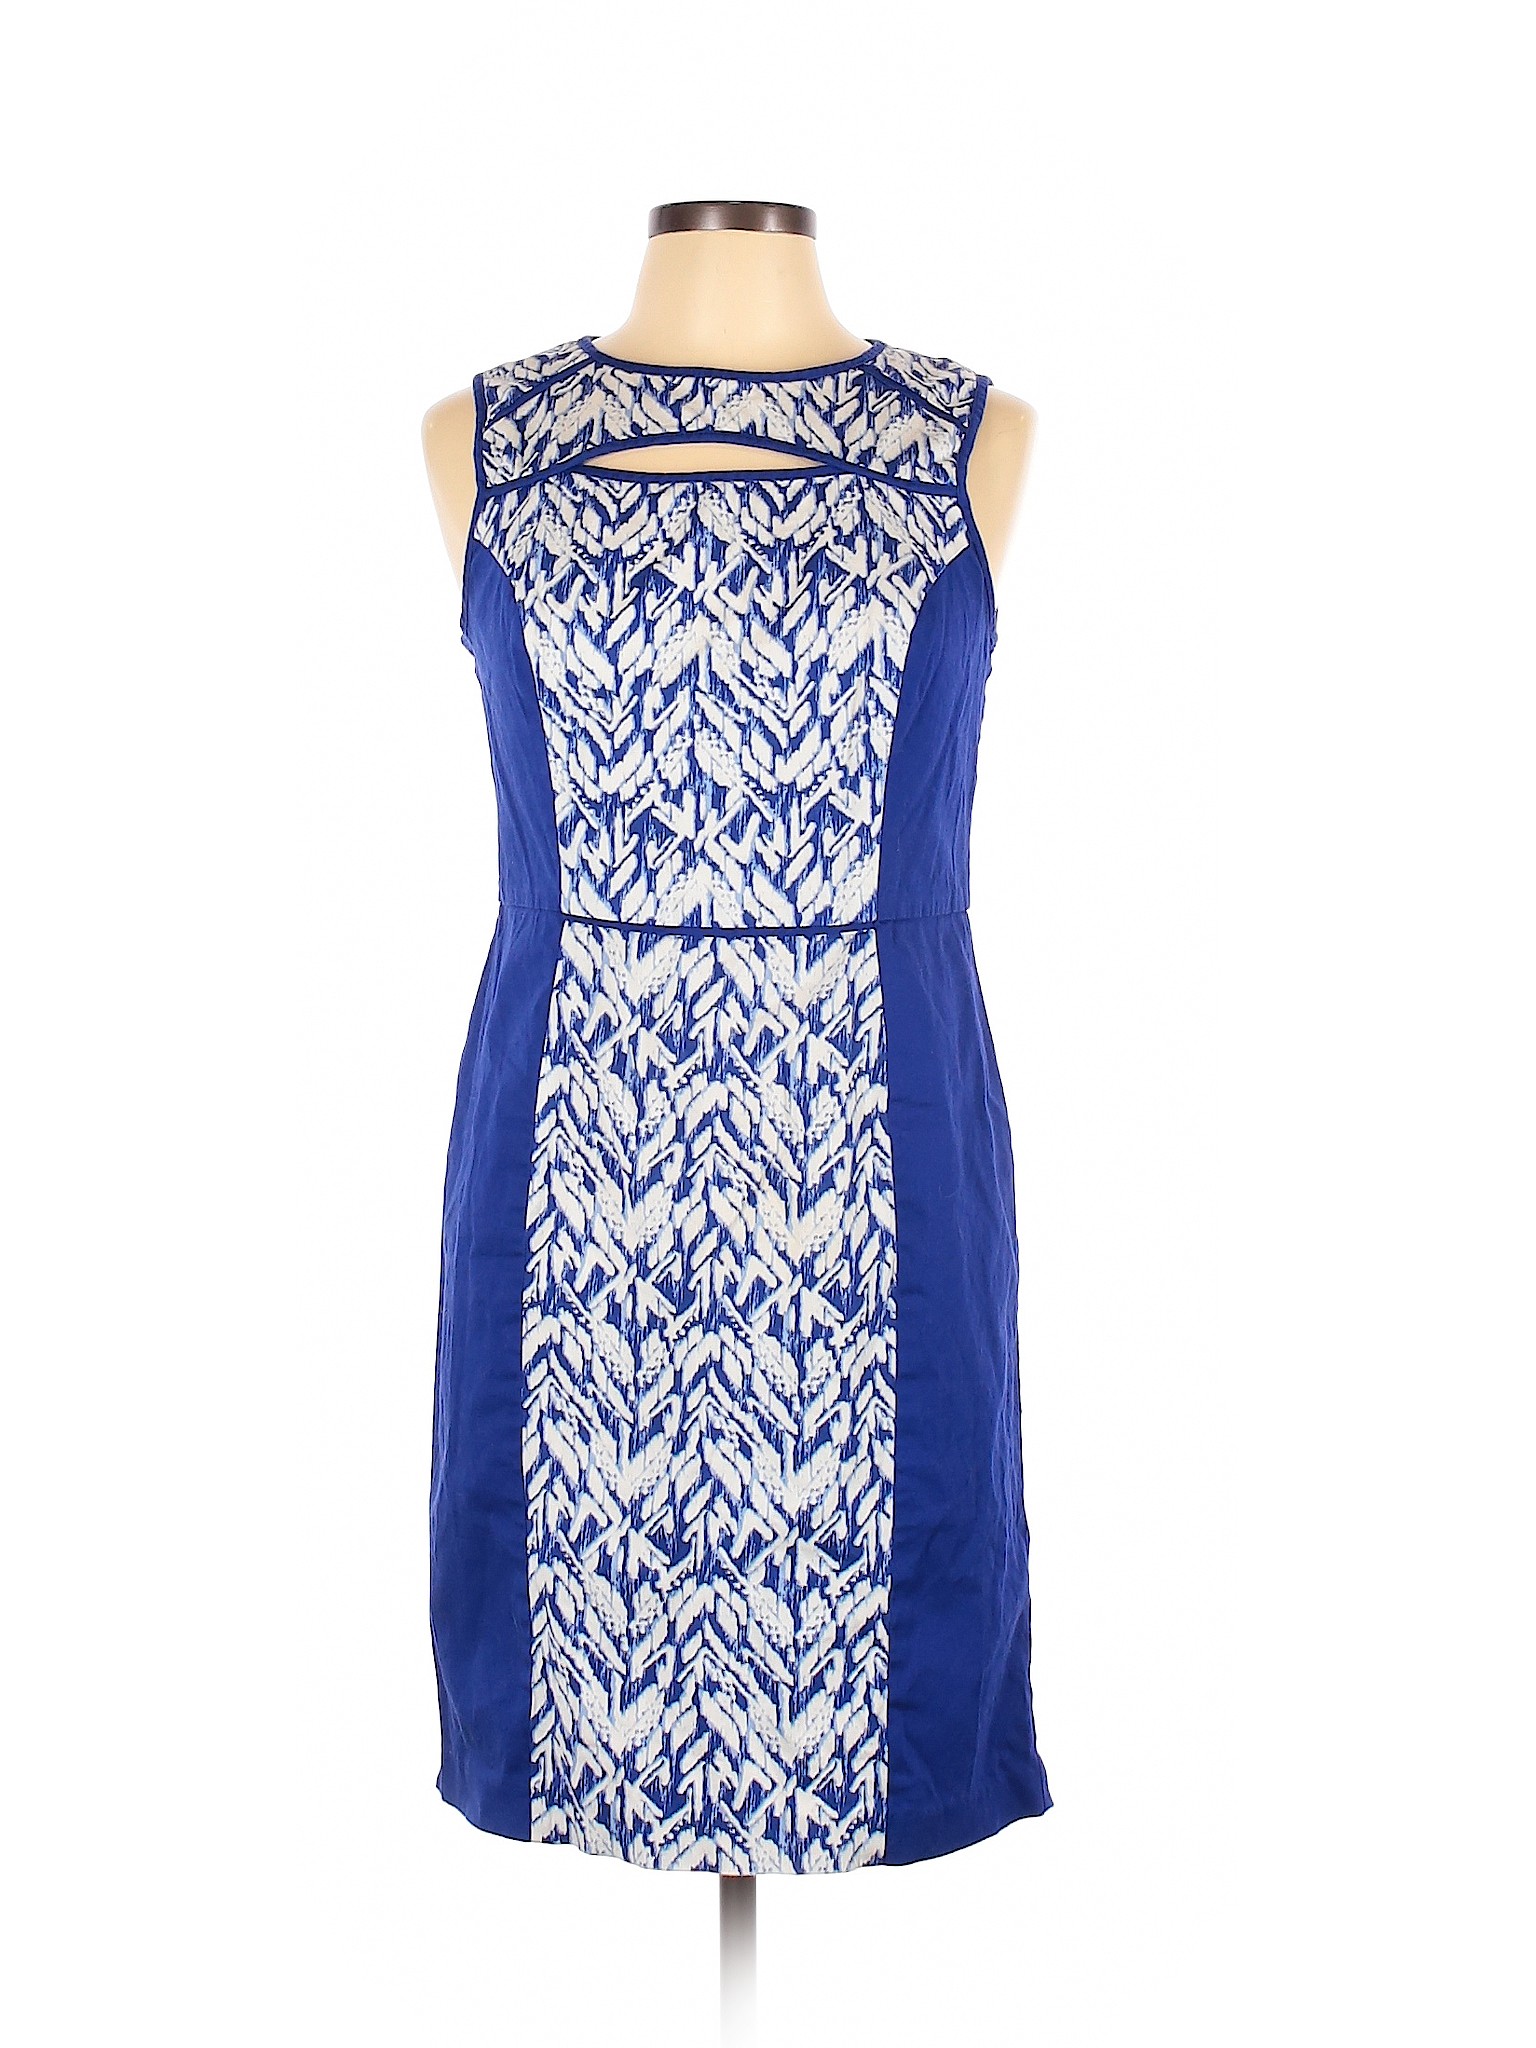 Roz & Ali Women Blue Casual Dress 12 | eBay